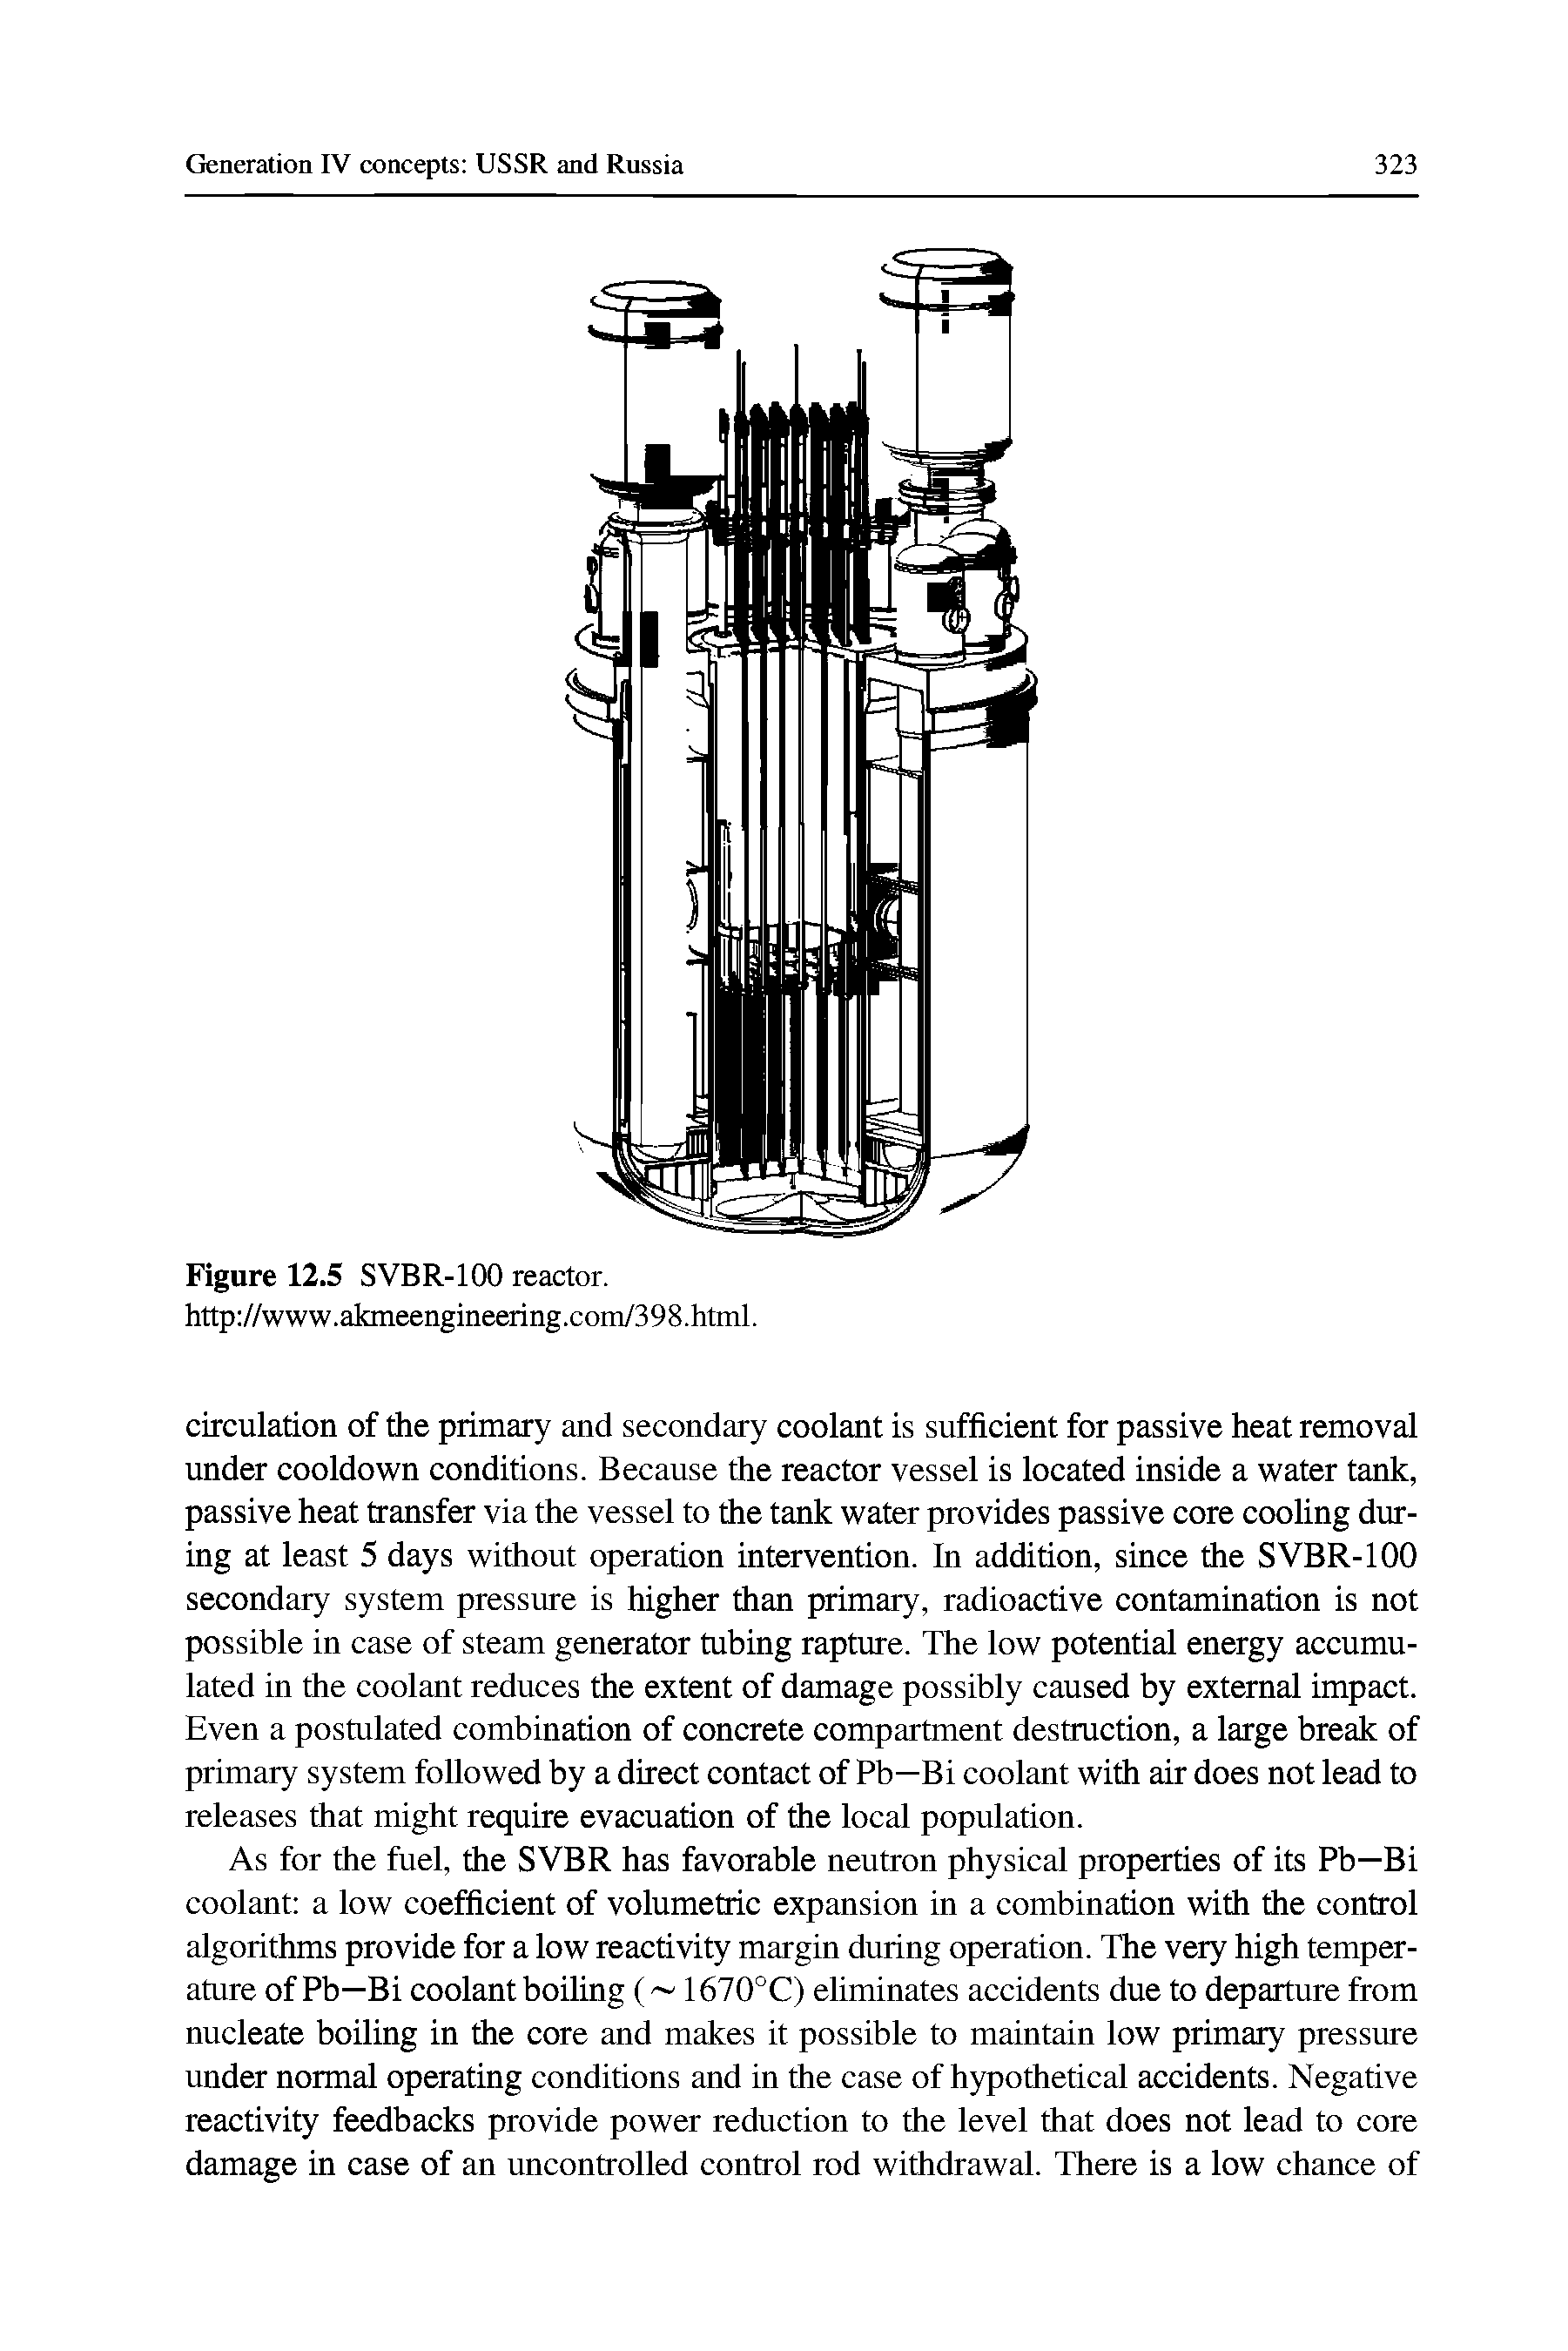 Figure 12.5 SVBR-100 reactor. http //www.akmeengineering.com/398.html.